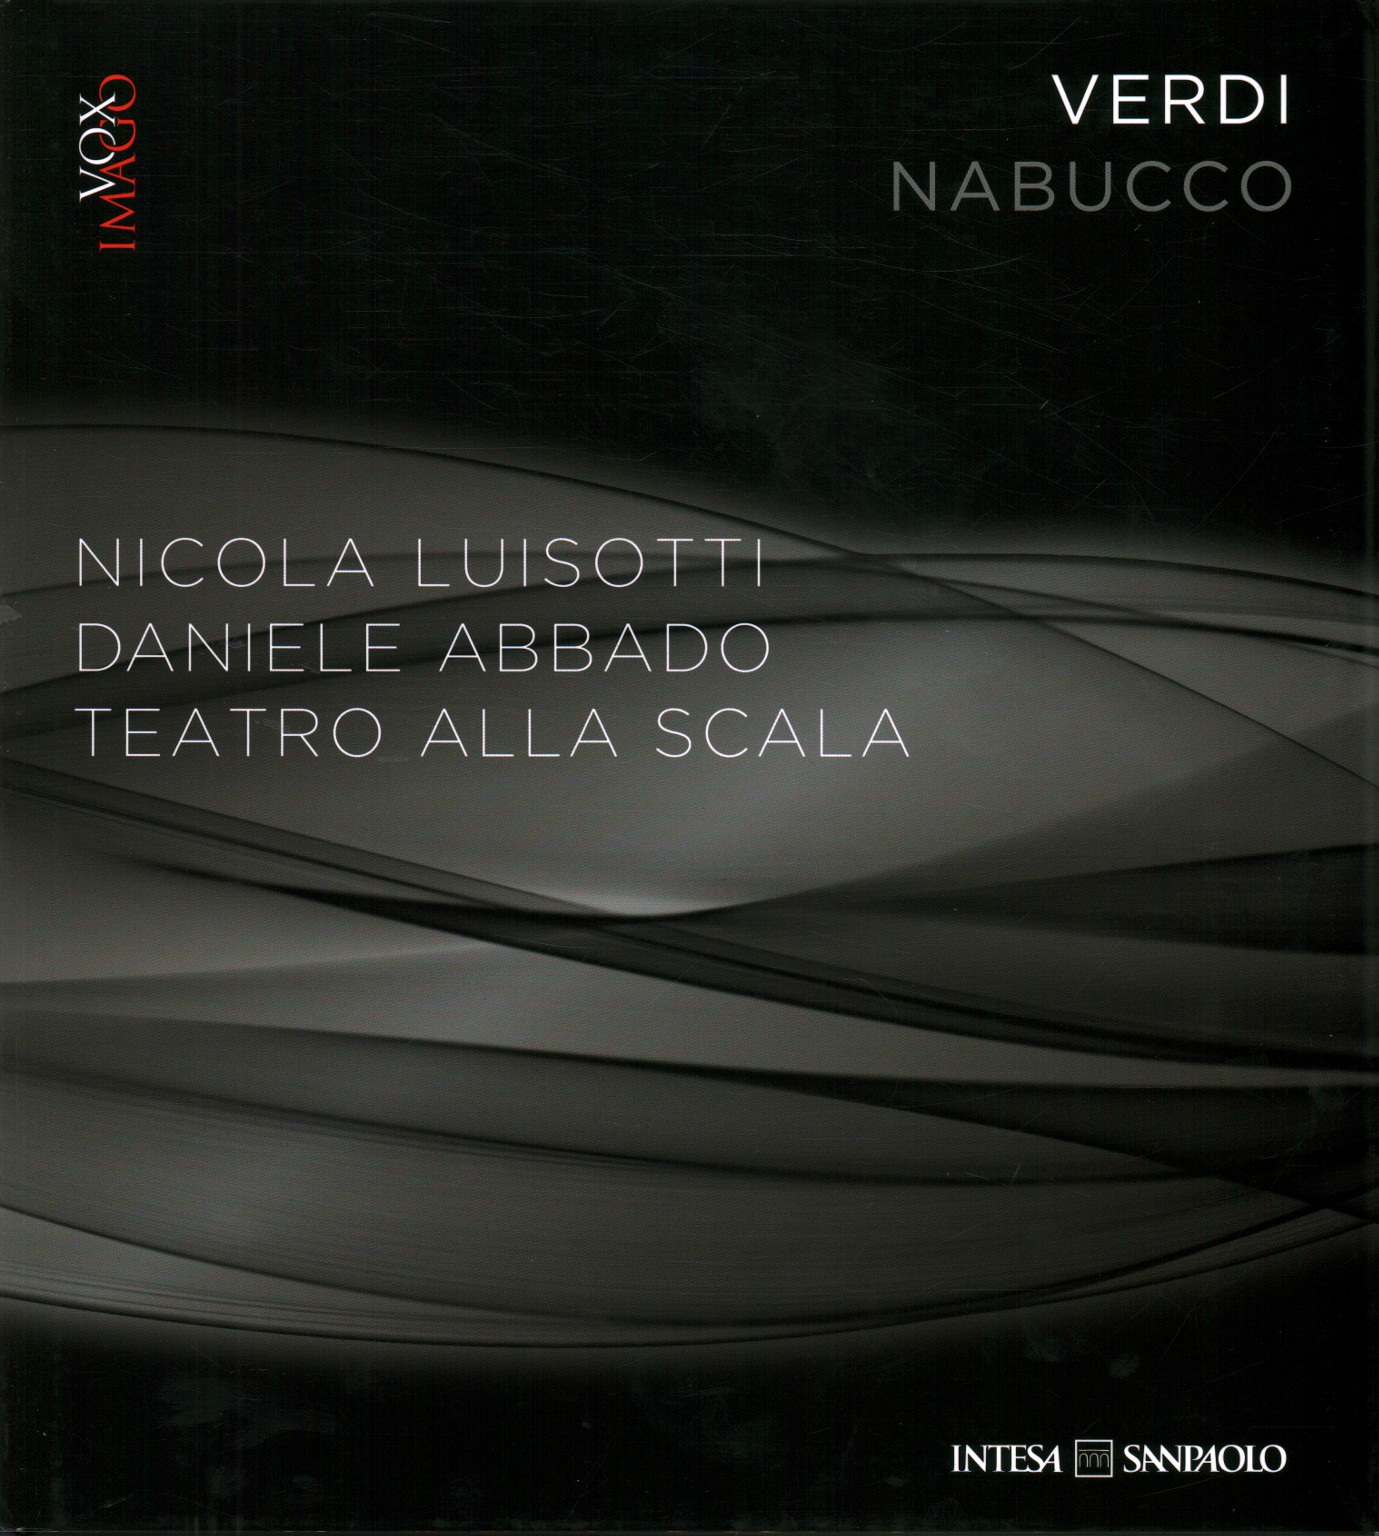 Verdi: Nabucco, Nicola Luisotti Et Daniele Abbado